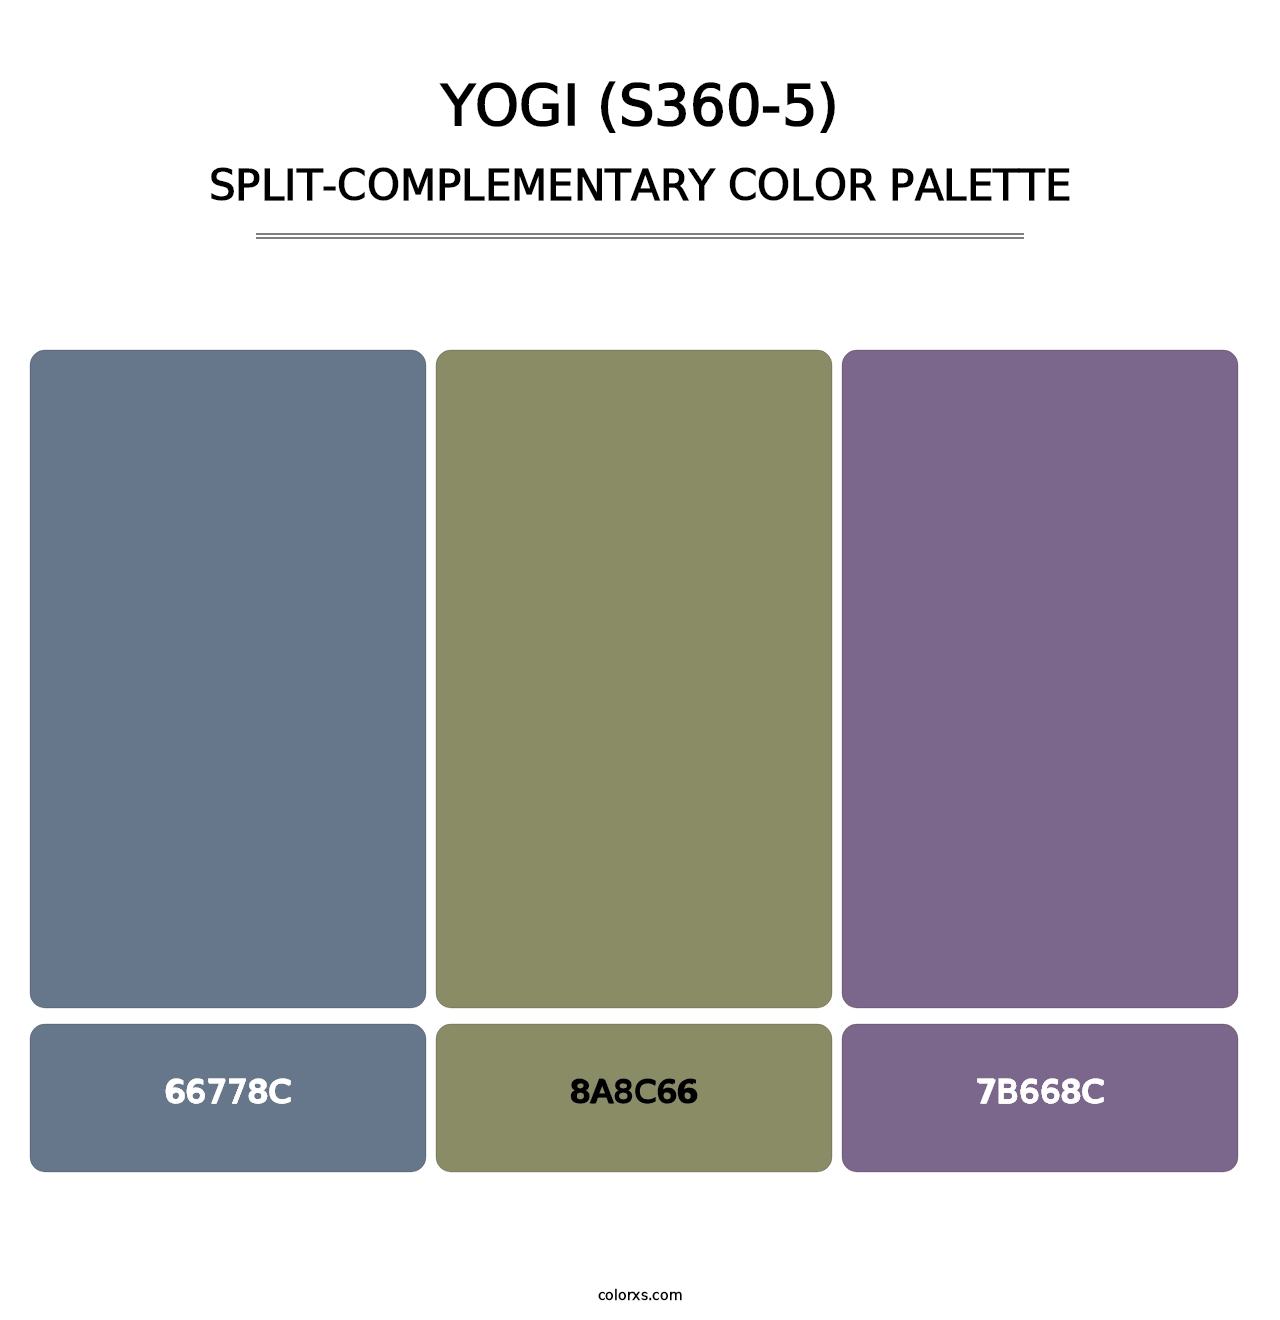 Yogi (S360-5) - Split-Complementary Color Palette